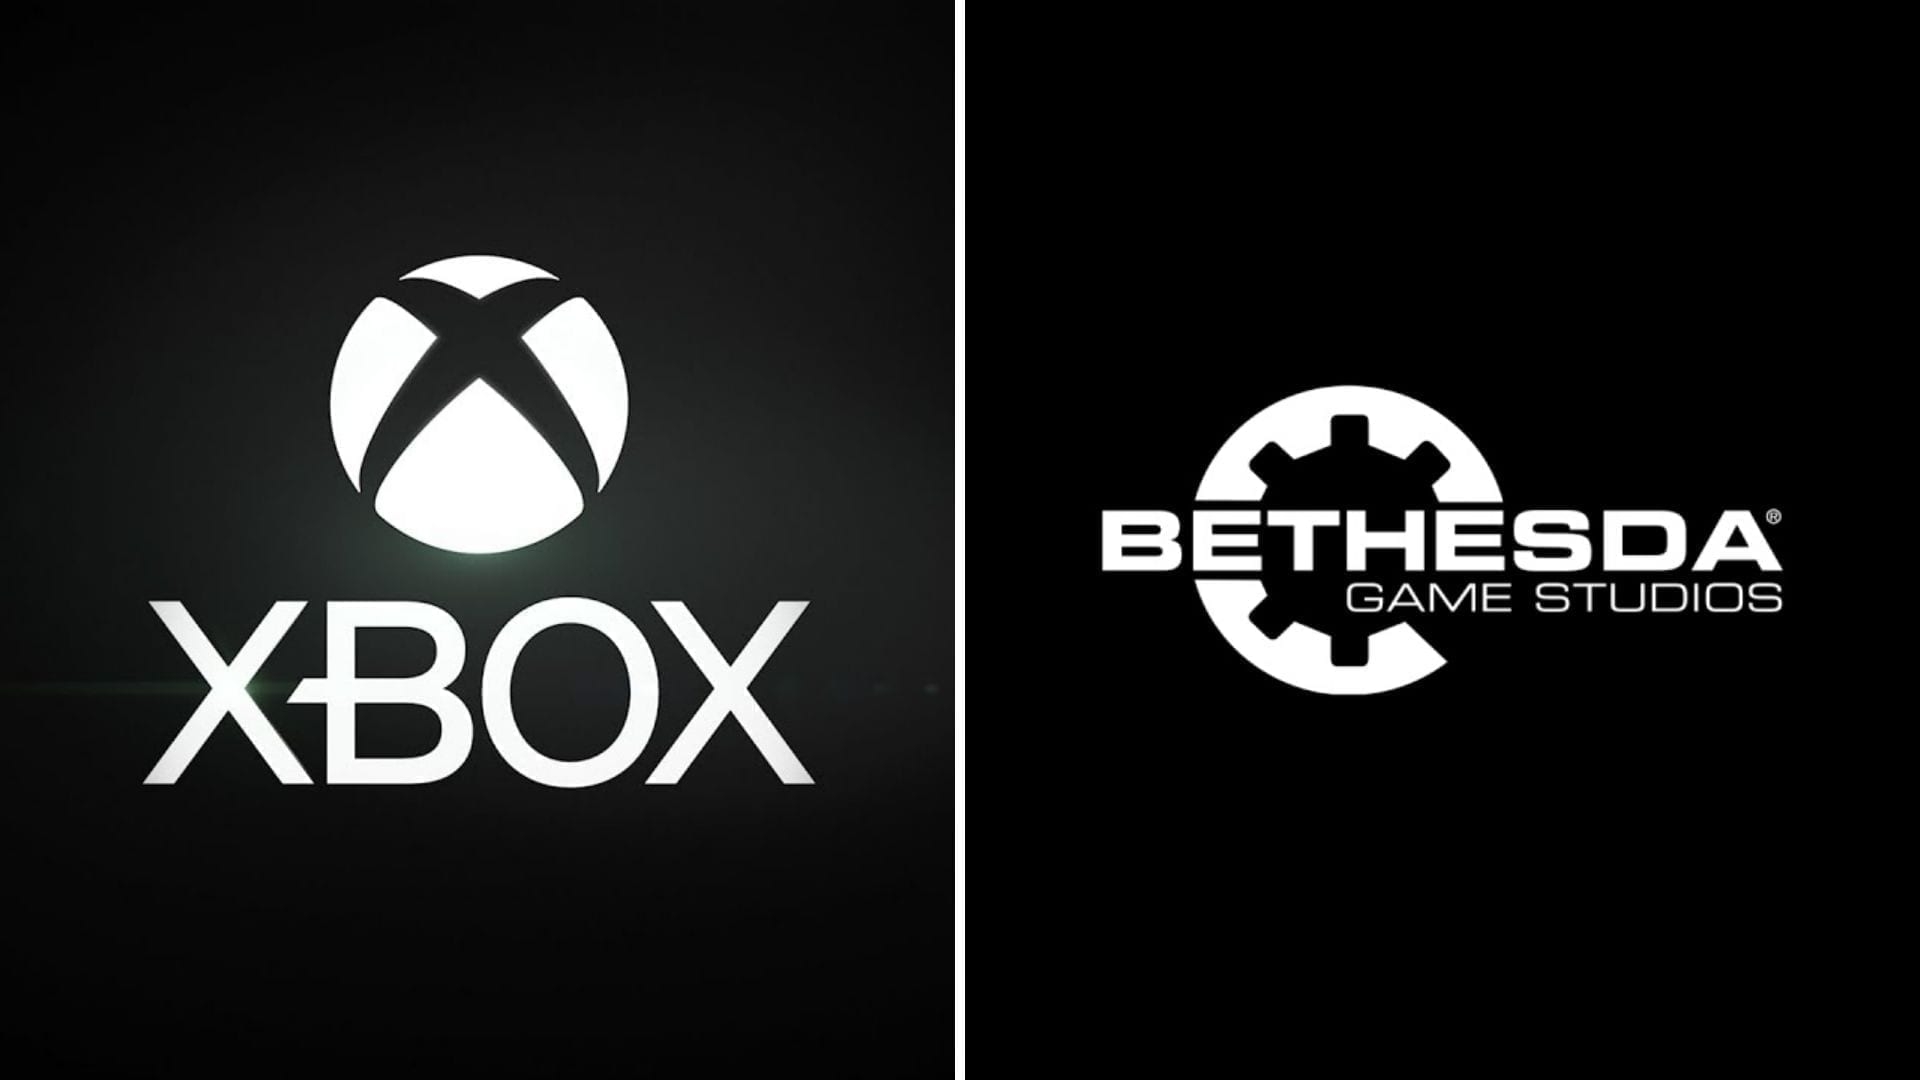 Xbox Games Studio E3 2021 將與 Bethesda 舉行聯合發表會